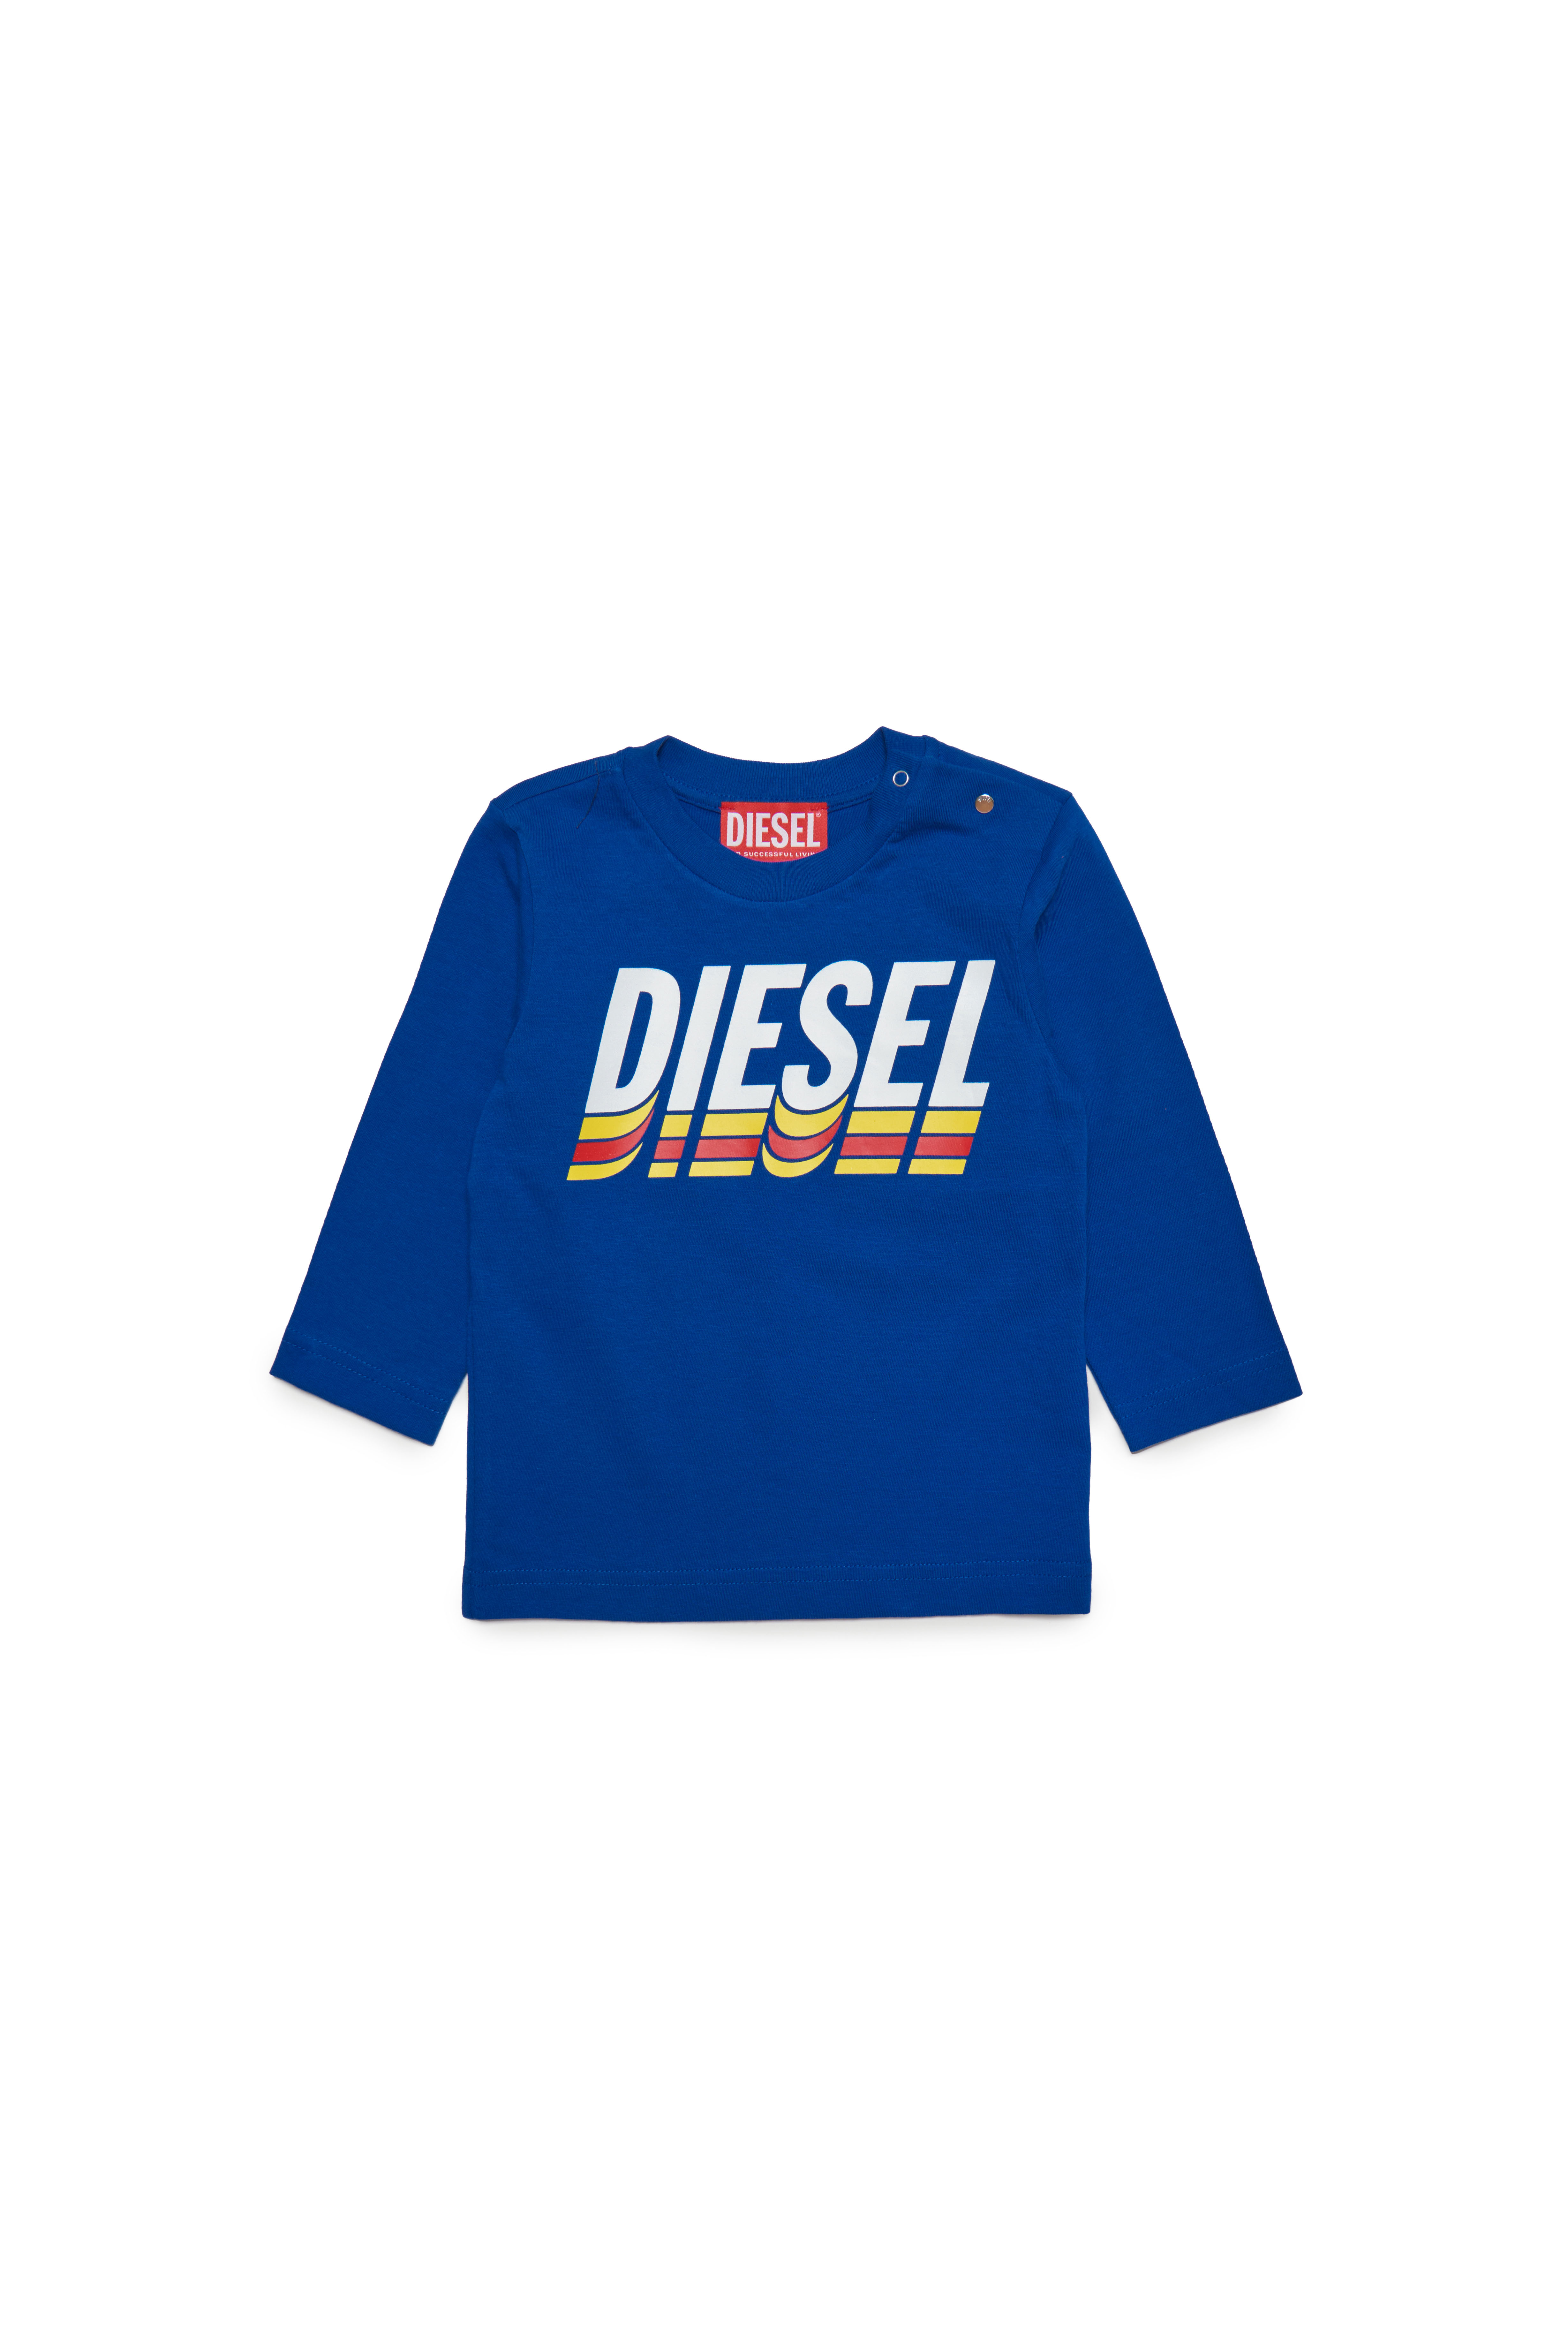 Diesel - TVASELSB, Blue - Image 1